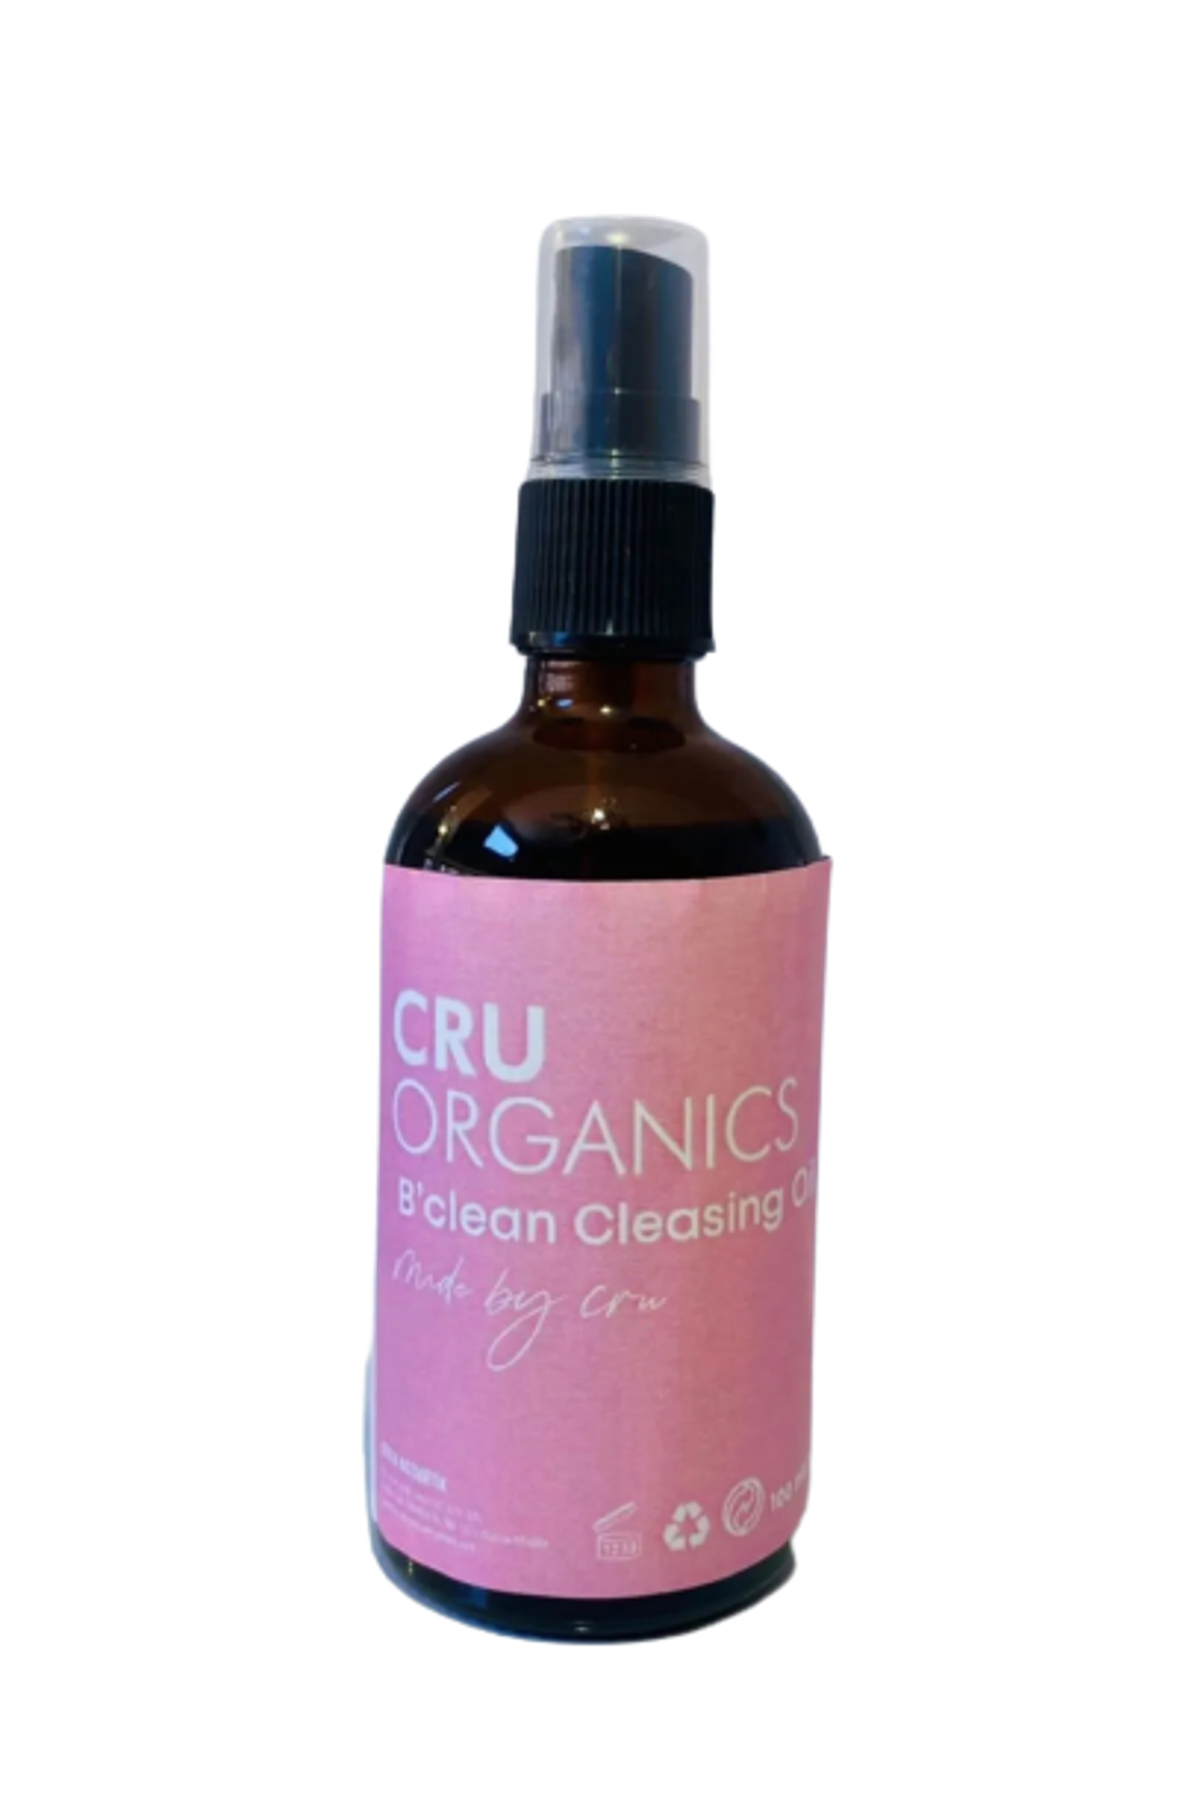 Cru Organics B’clean Cleasing Oil - Yüz Temizleme Yağı CRUS123 100ml.